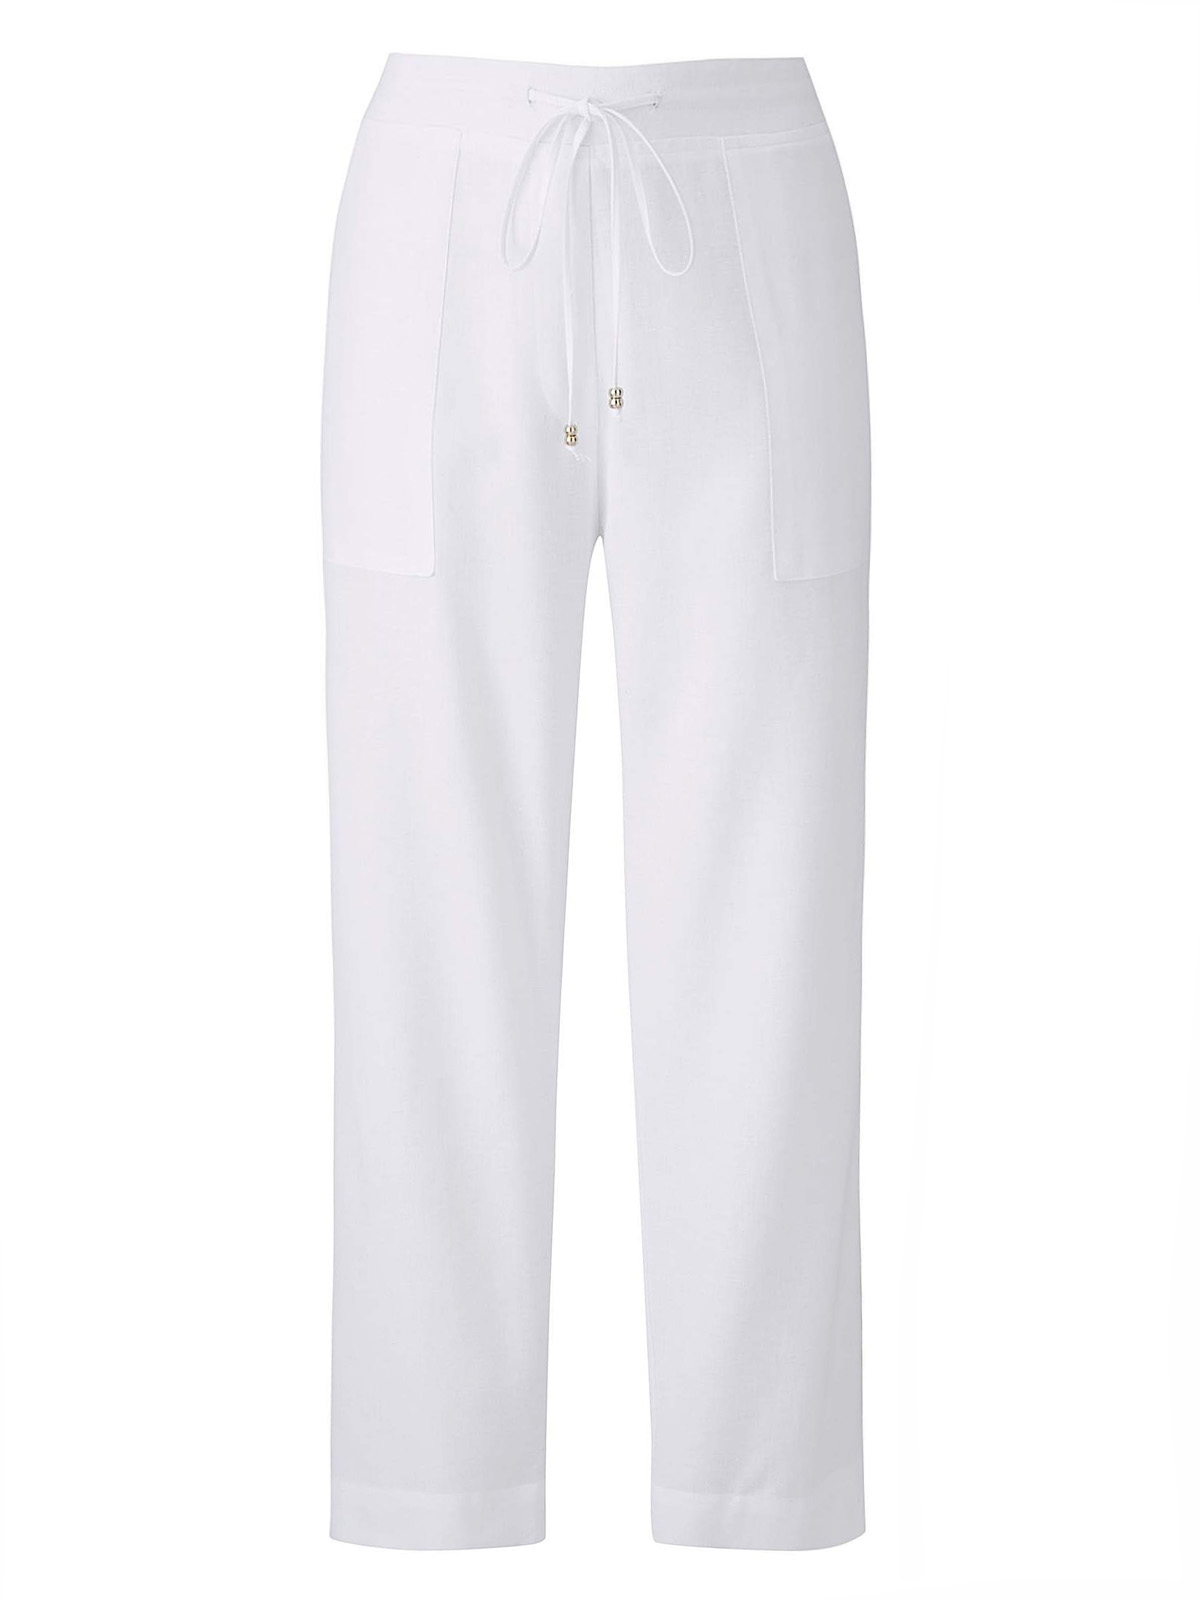 Julipa - - Julipa WHITE Linen Blend Drawstring Trousers - Size 10 to 30